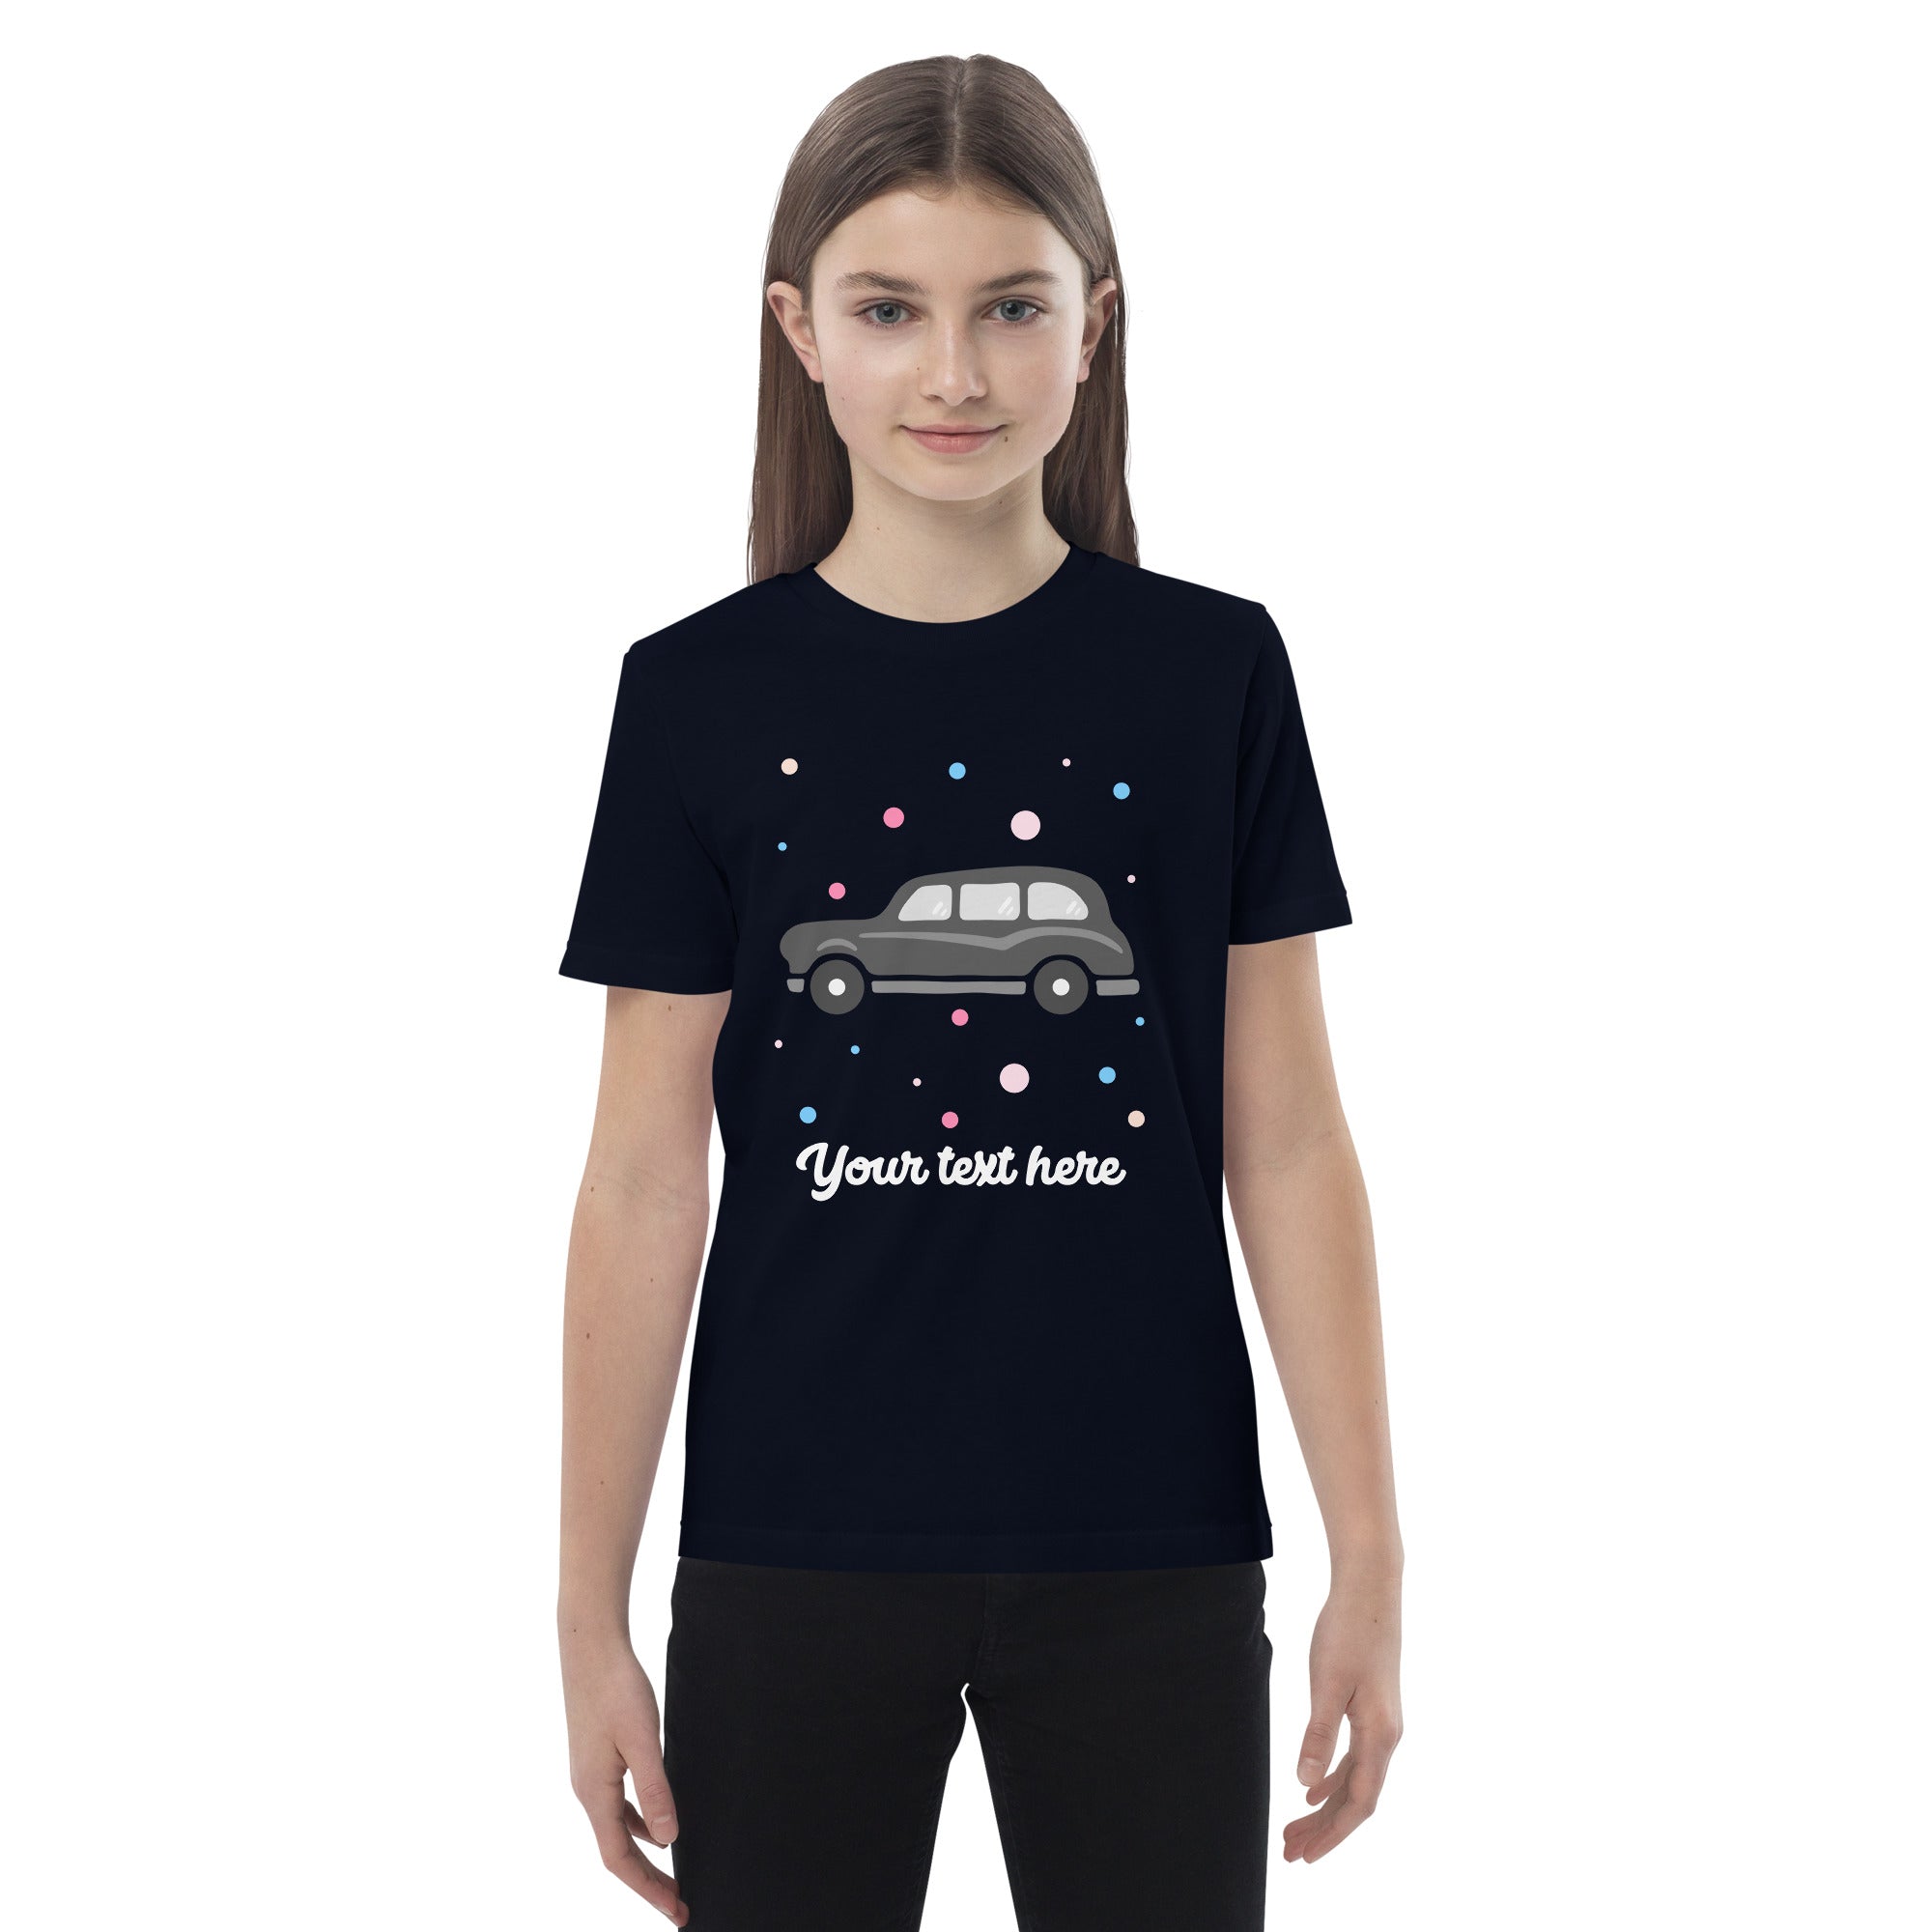 Personalised Custom Text - Organic Cotton Kids T-Shirt - London Doodles - Black Taxi - Navy 3